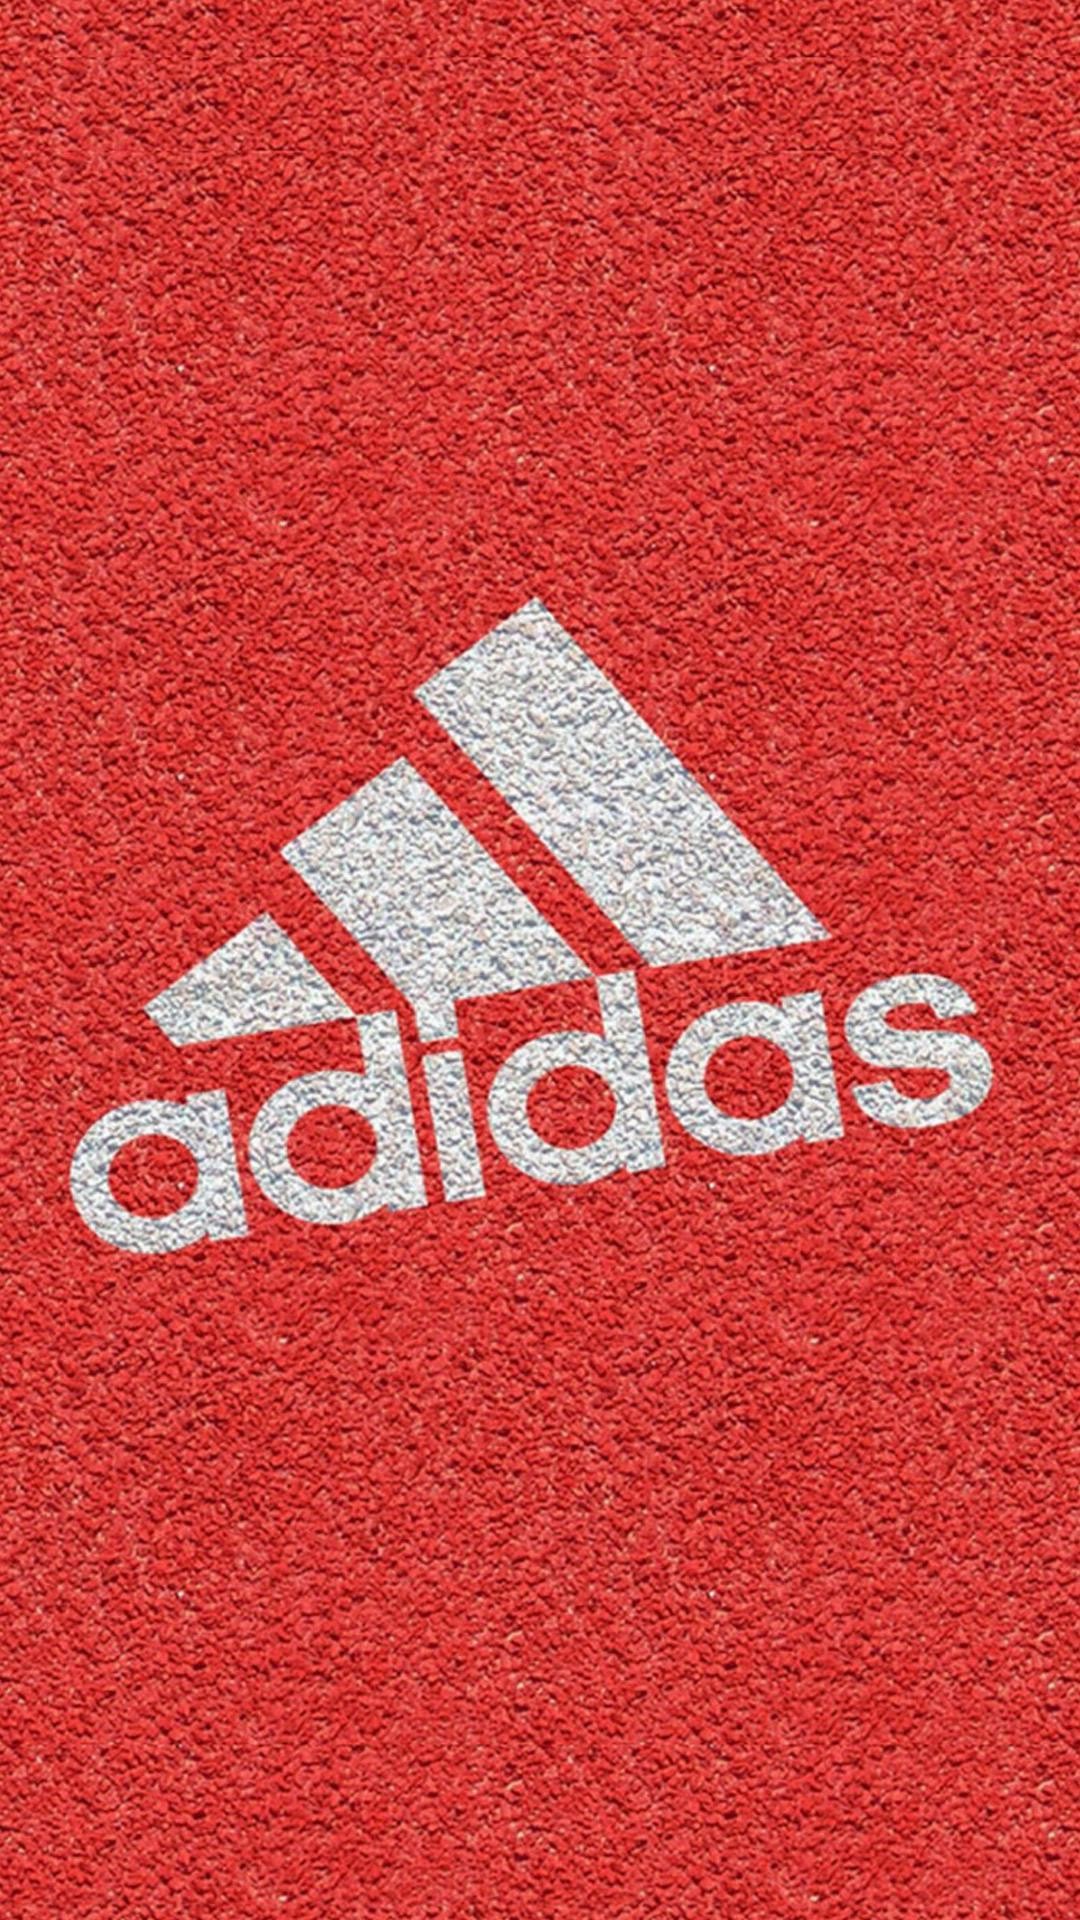 Wiki Red Adidas Iphone Background Pic Wpc Adidas Logo Wallpaper Iphone X 1080x19 Wallpaper Teahub Io